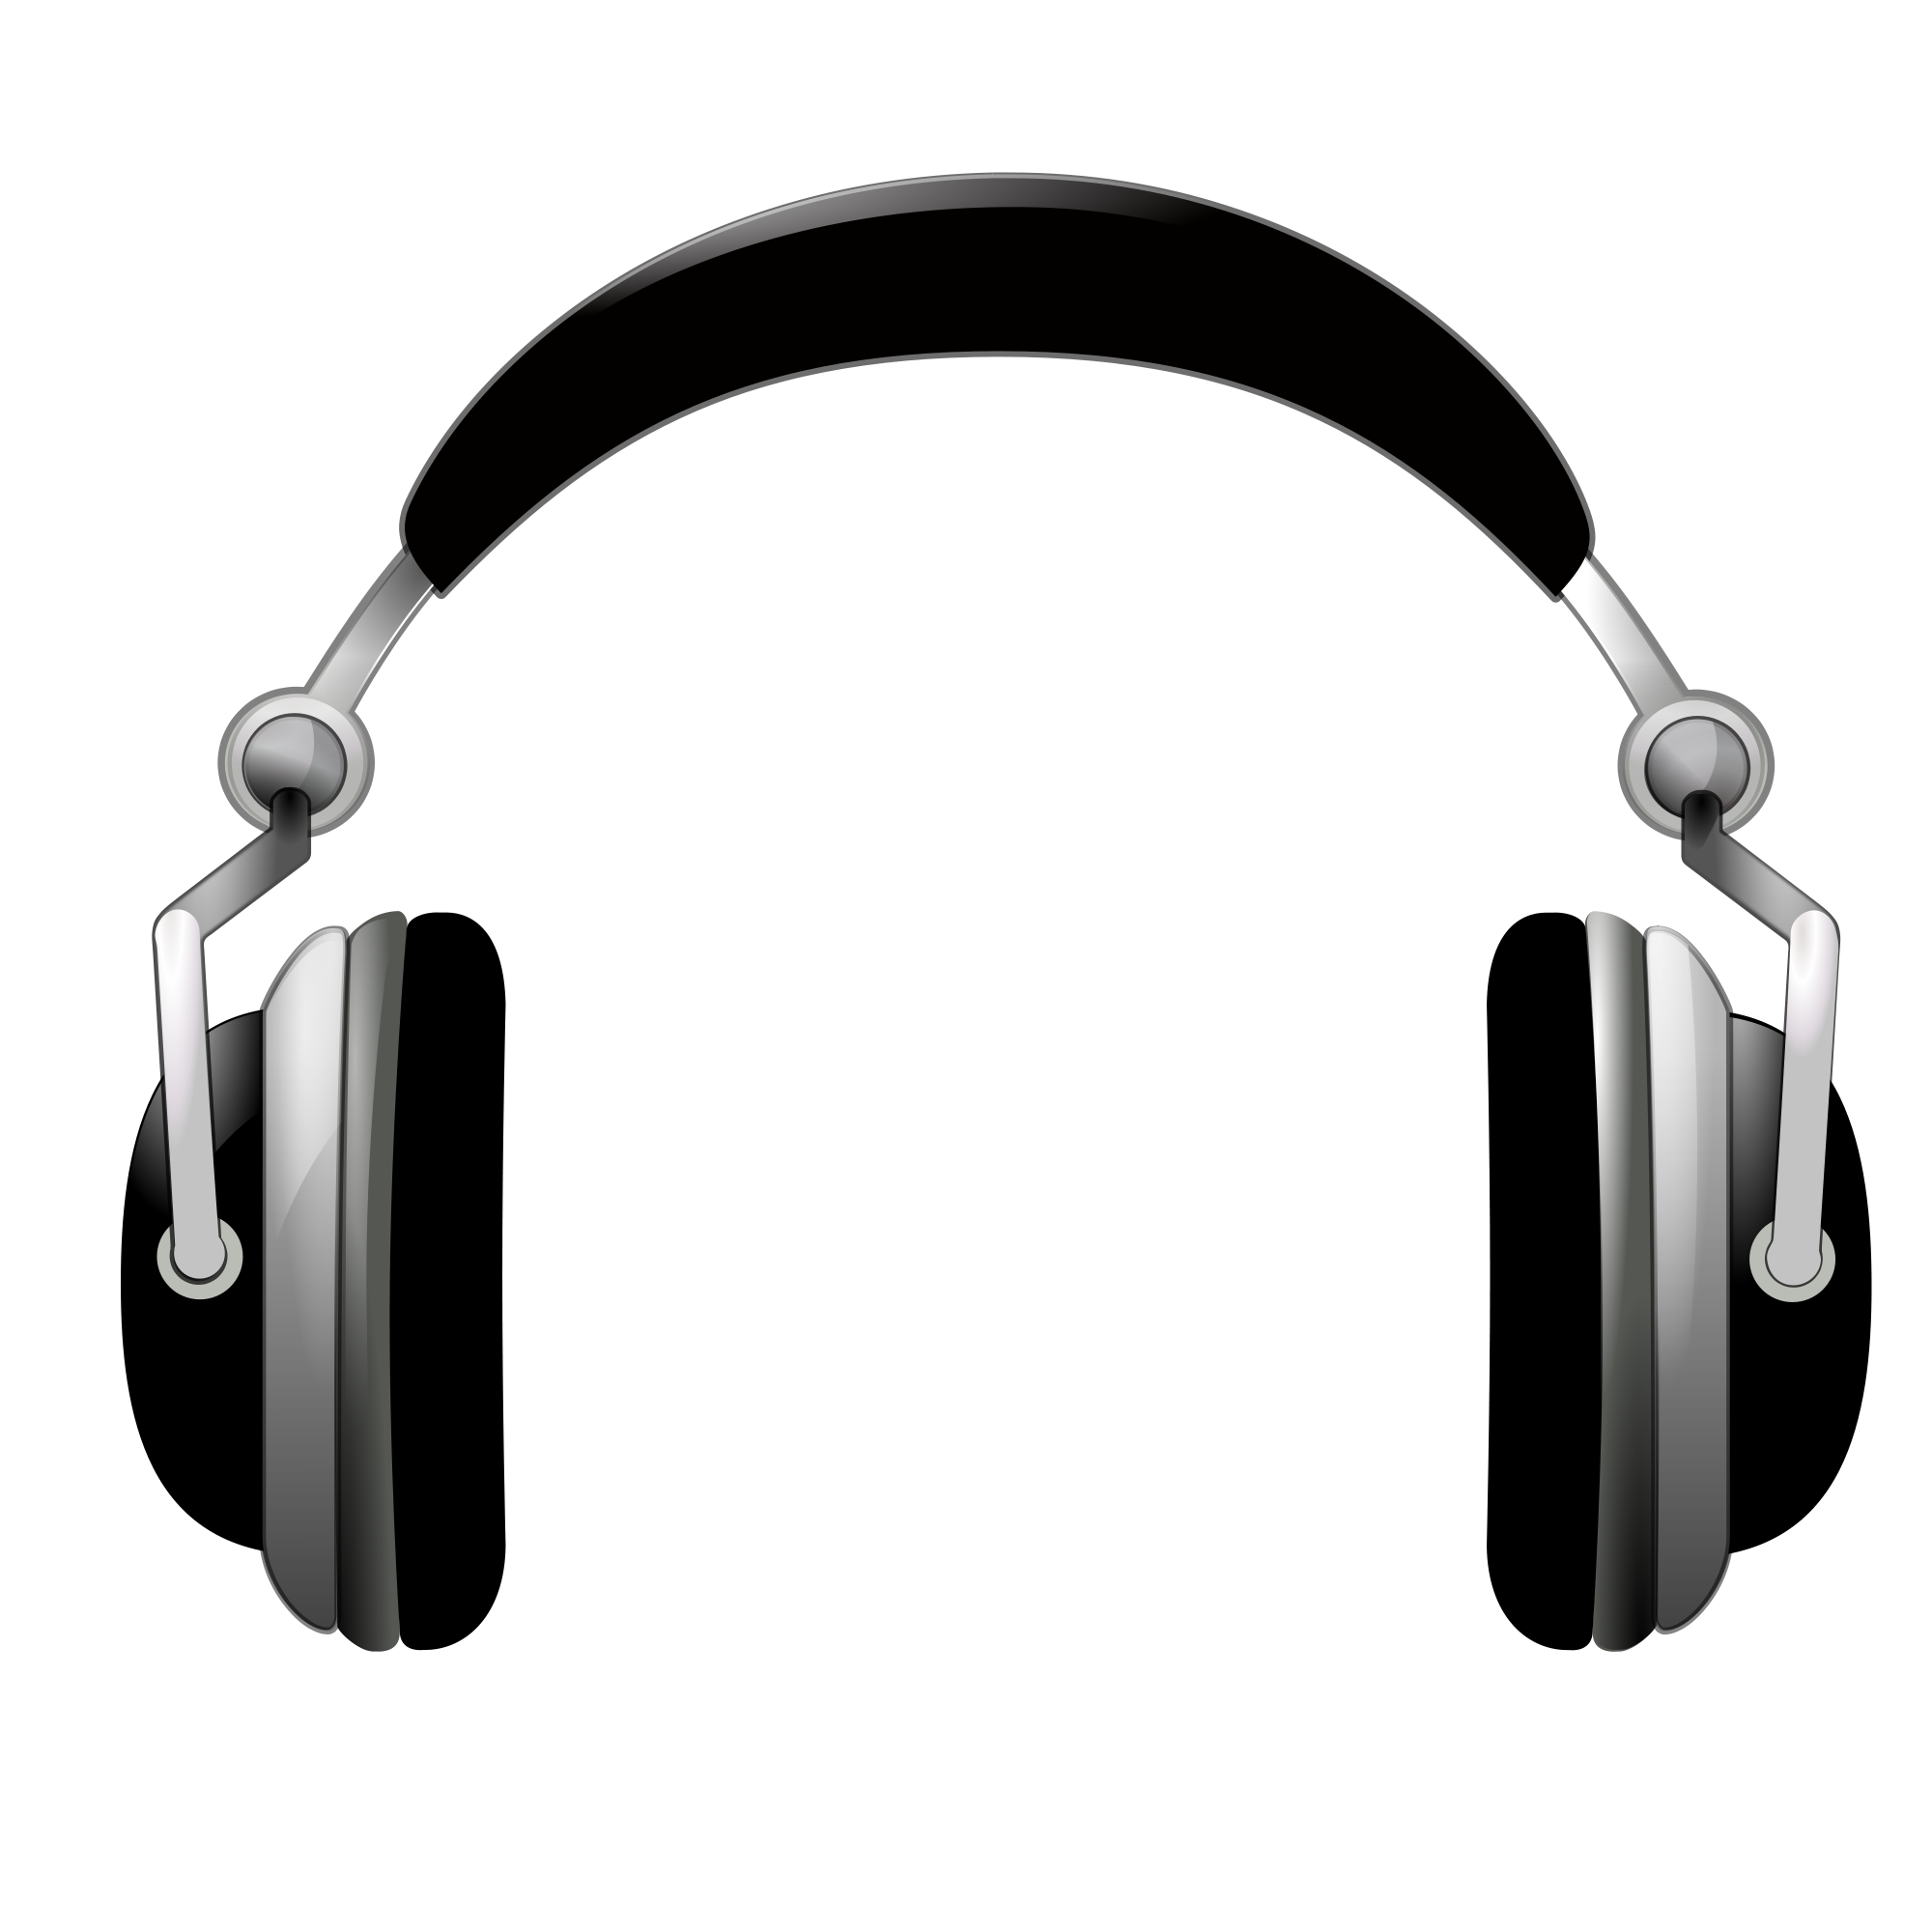 Headphones Picture Png Image - Headphones, Transparent background PNG HD thumbnail